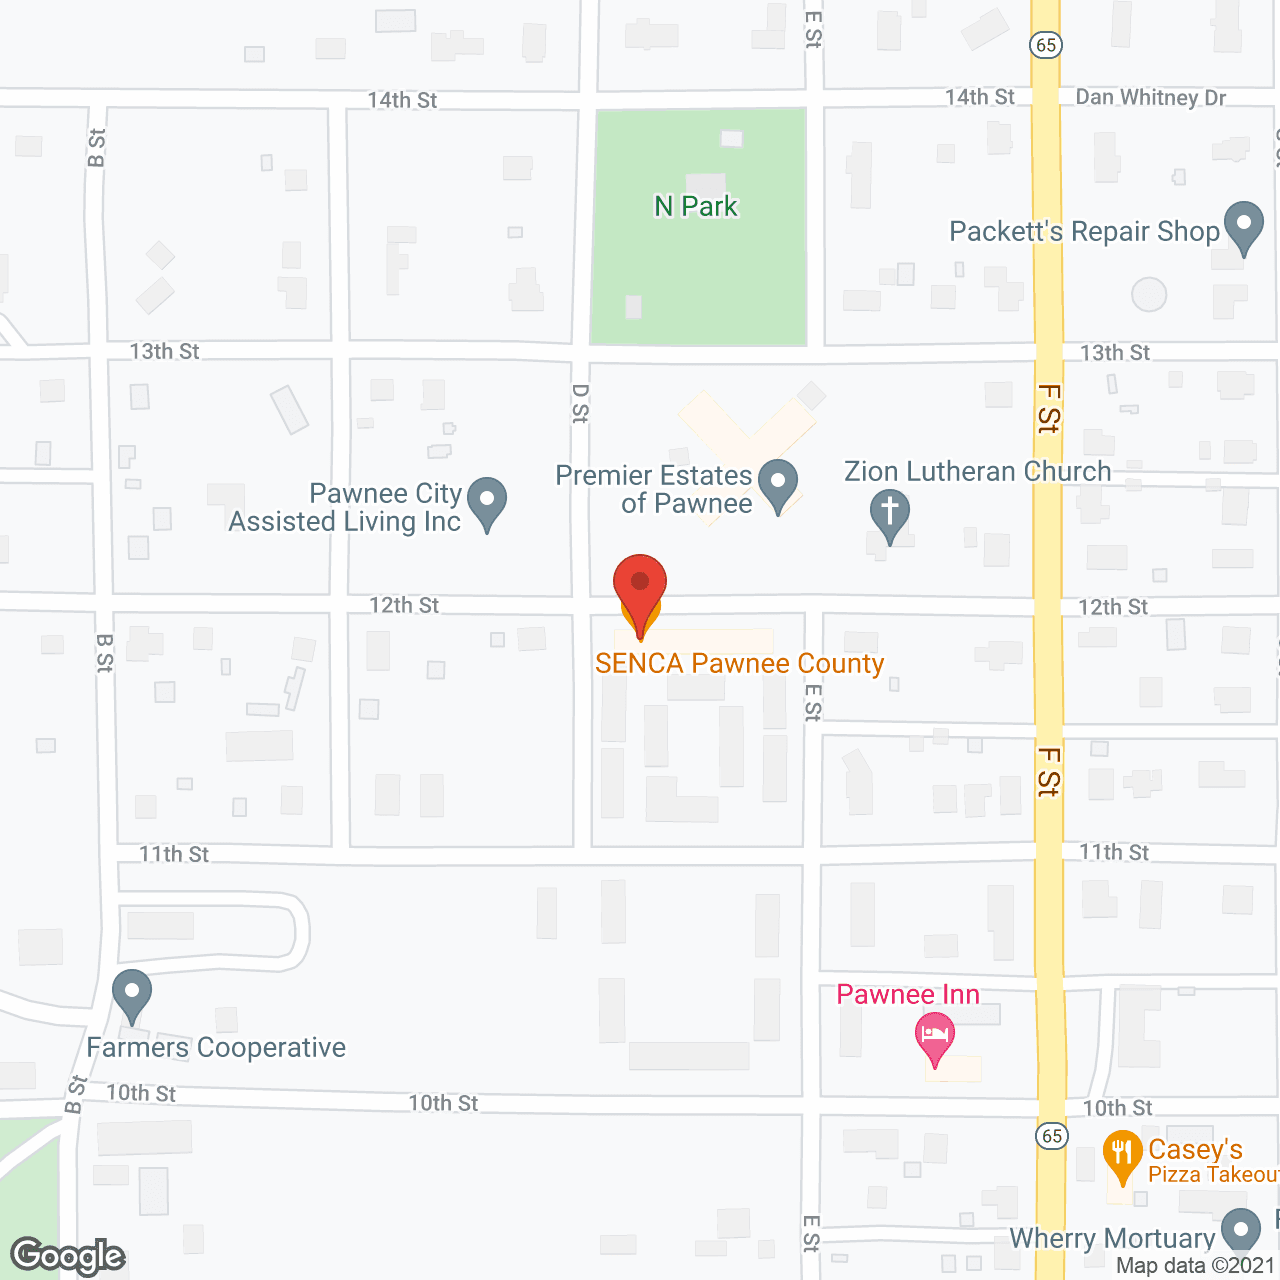 Pawnee Village Office in google map